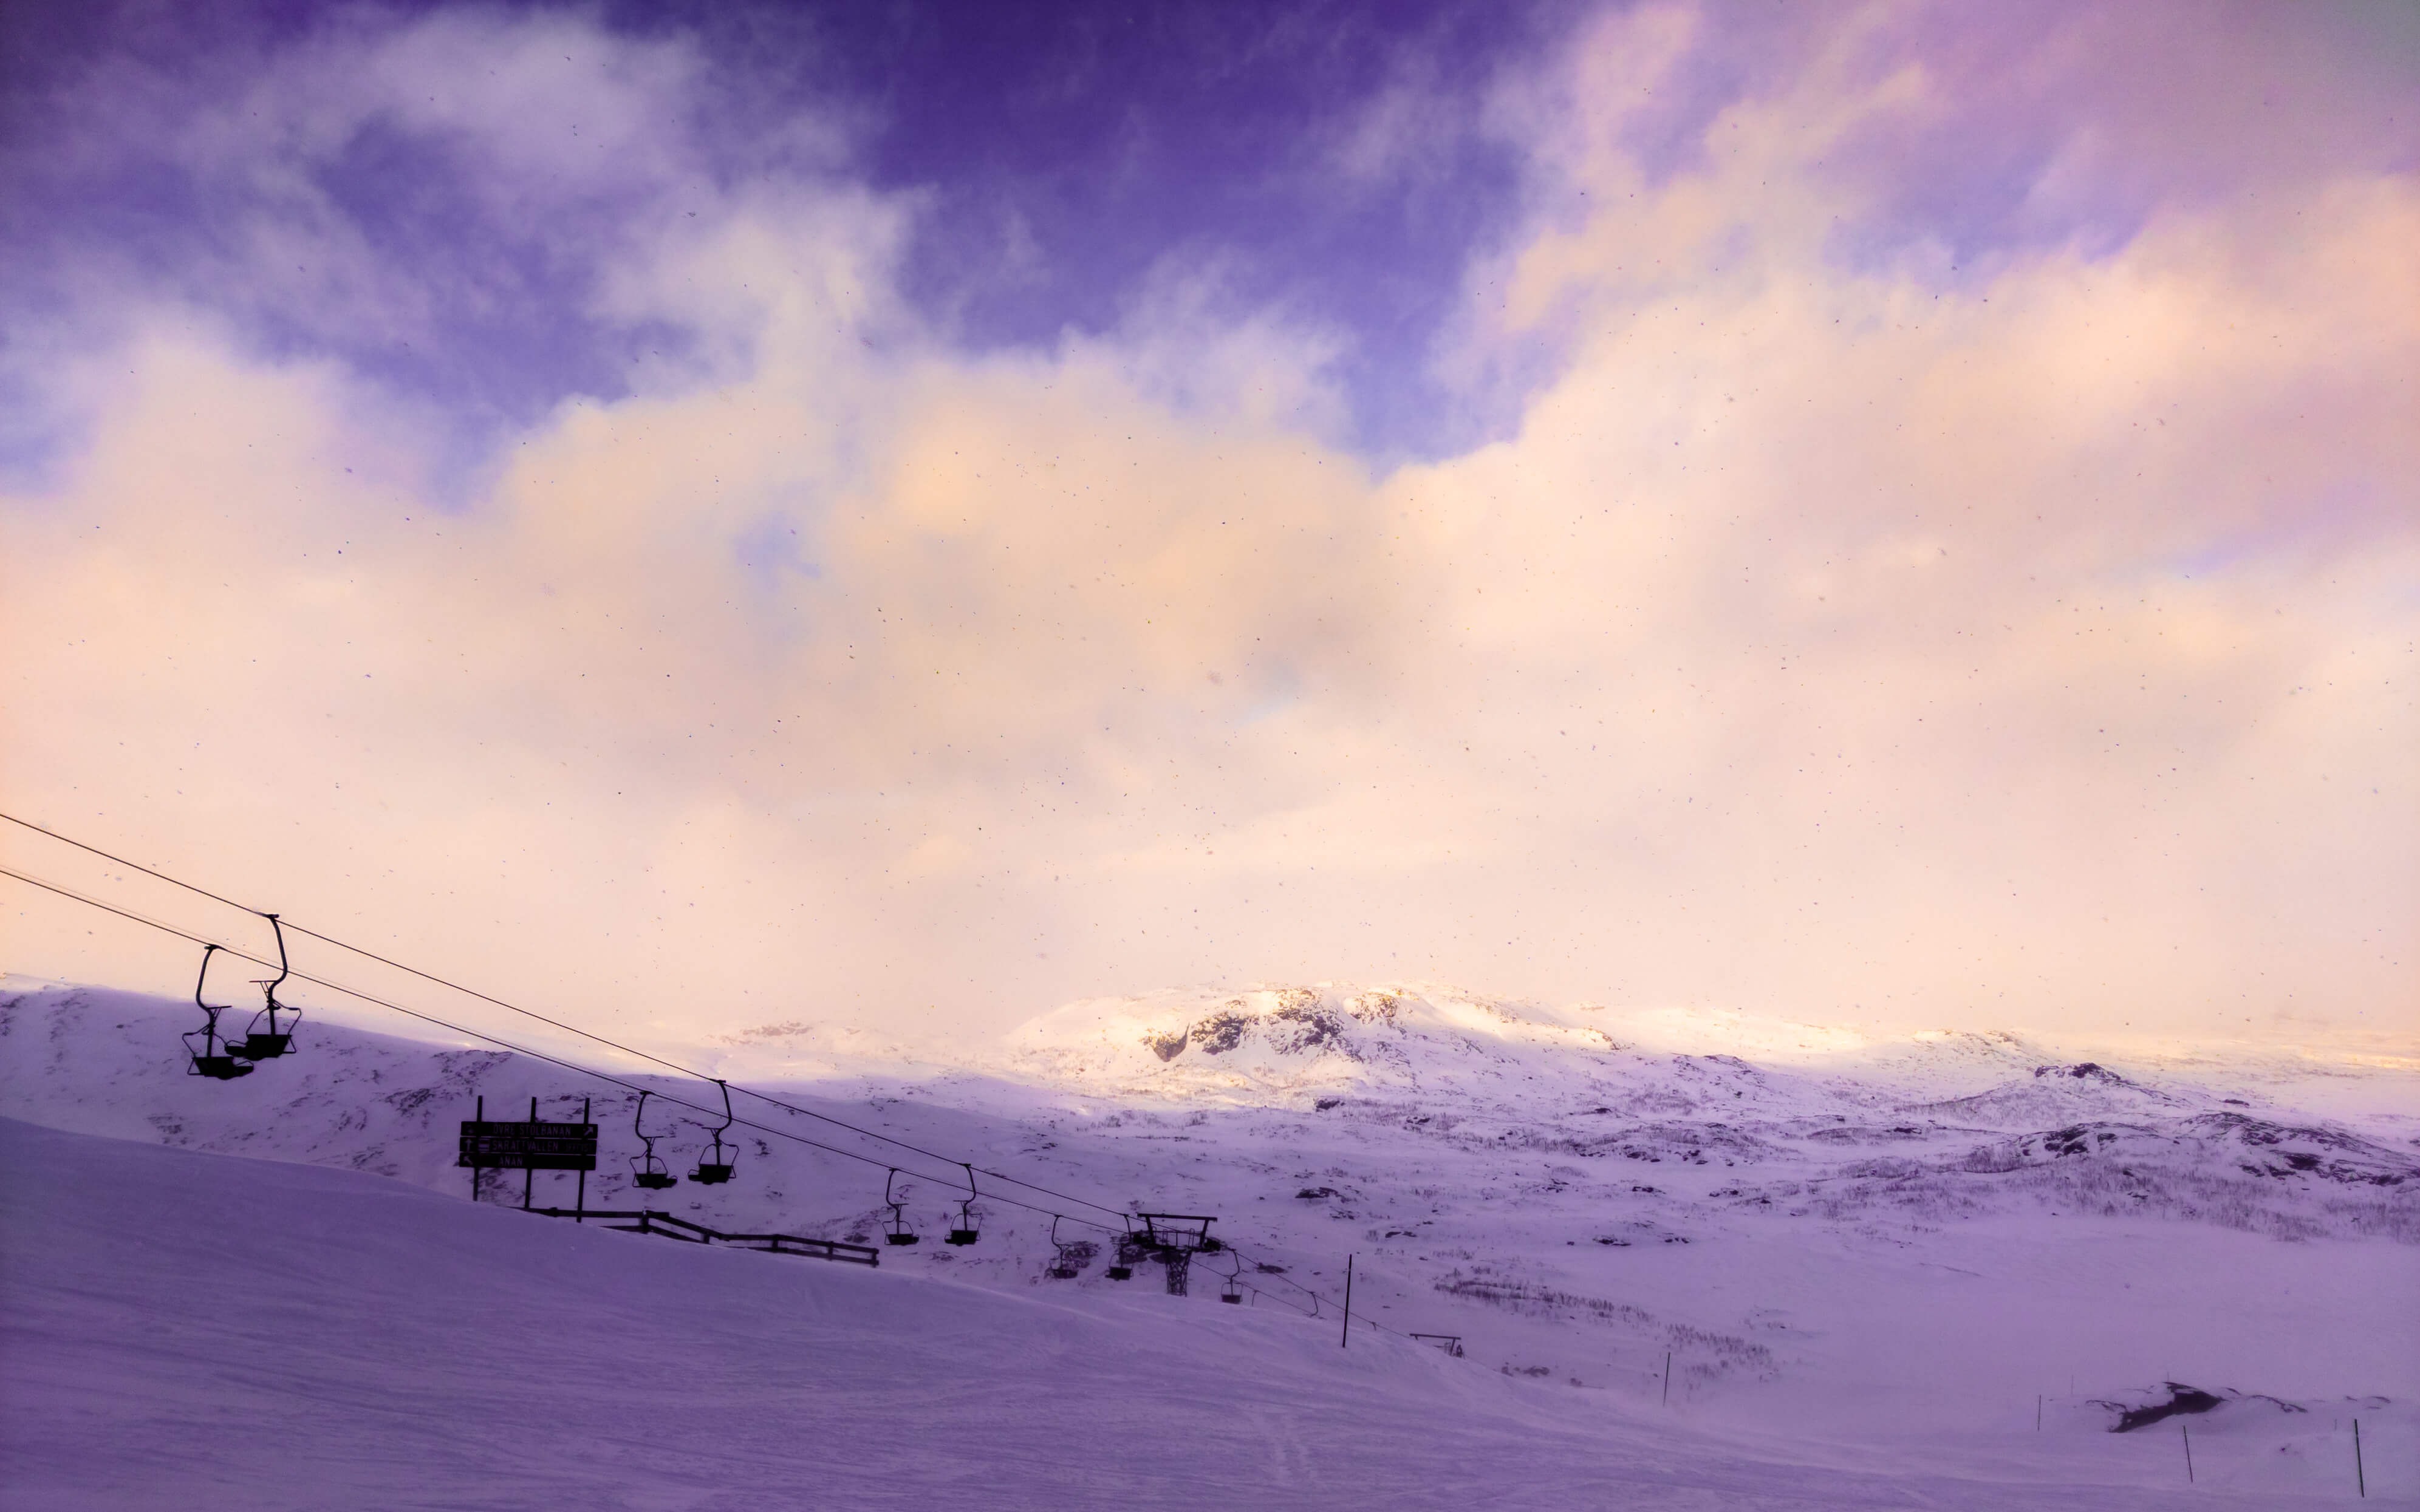 A winter landscape in a mountanous terrain with a ski lift